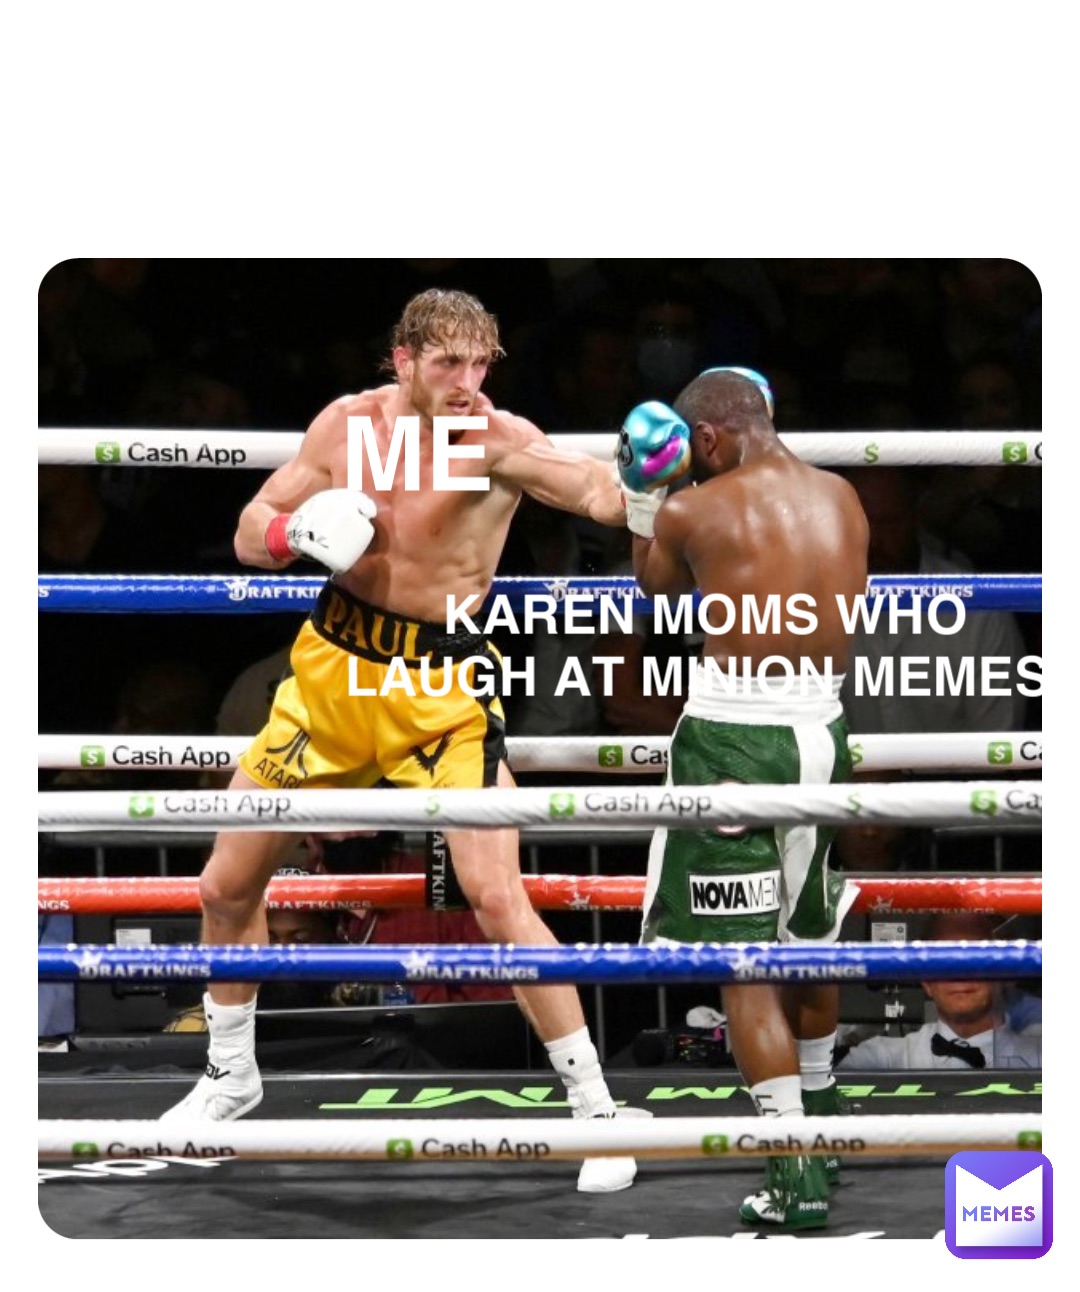 Me Karen moms who 
laugh at minion memes